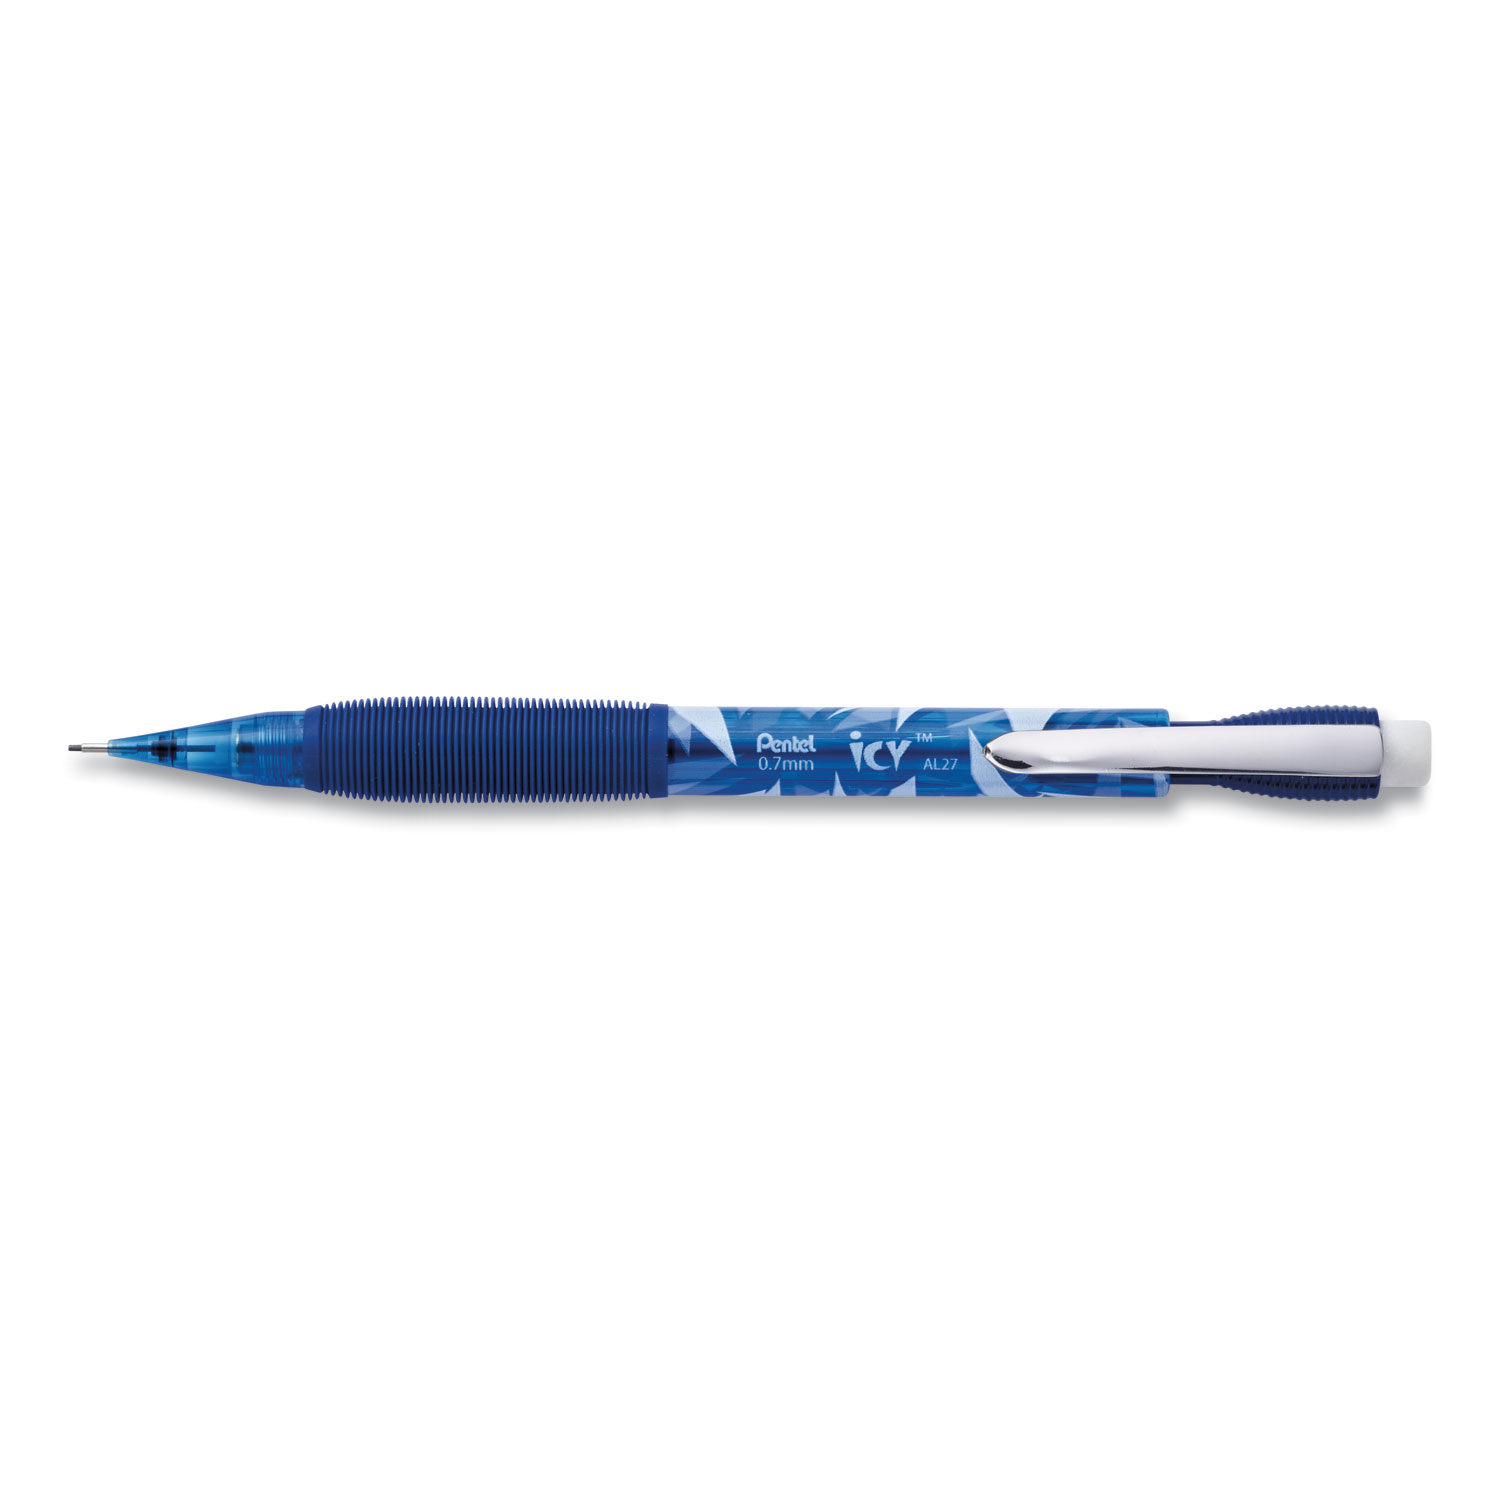  Pentel AL27TC Icy Mechanical Pencil, 0.7 mm, HB (#2.5), Black Lead, Transparent Blue Barrel, Dozen (PENAL27TC) 